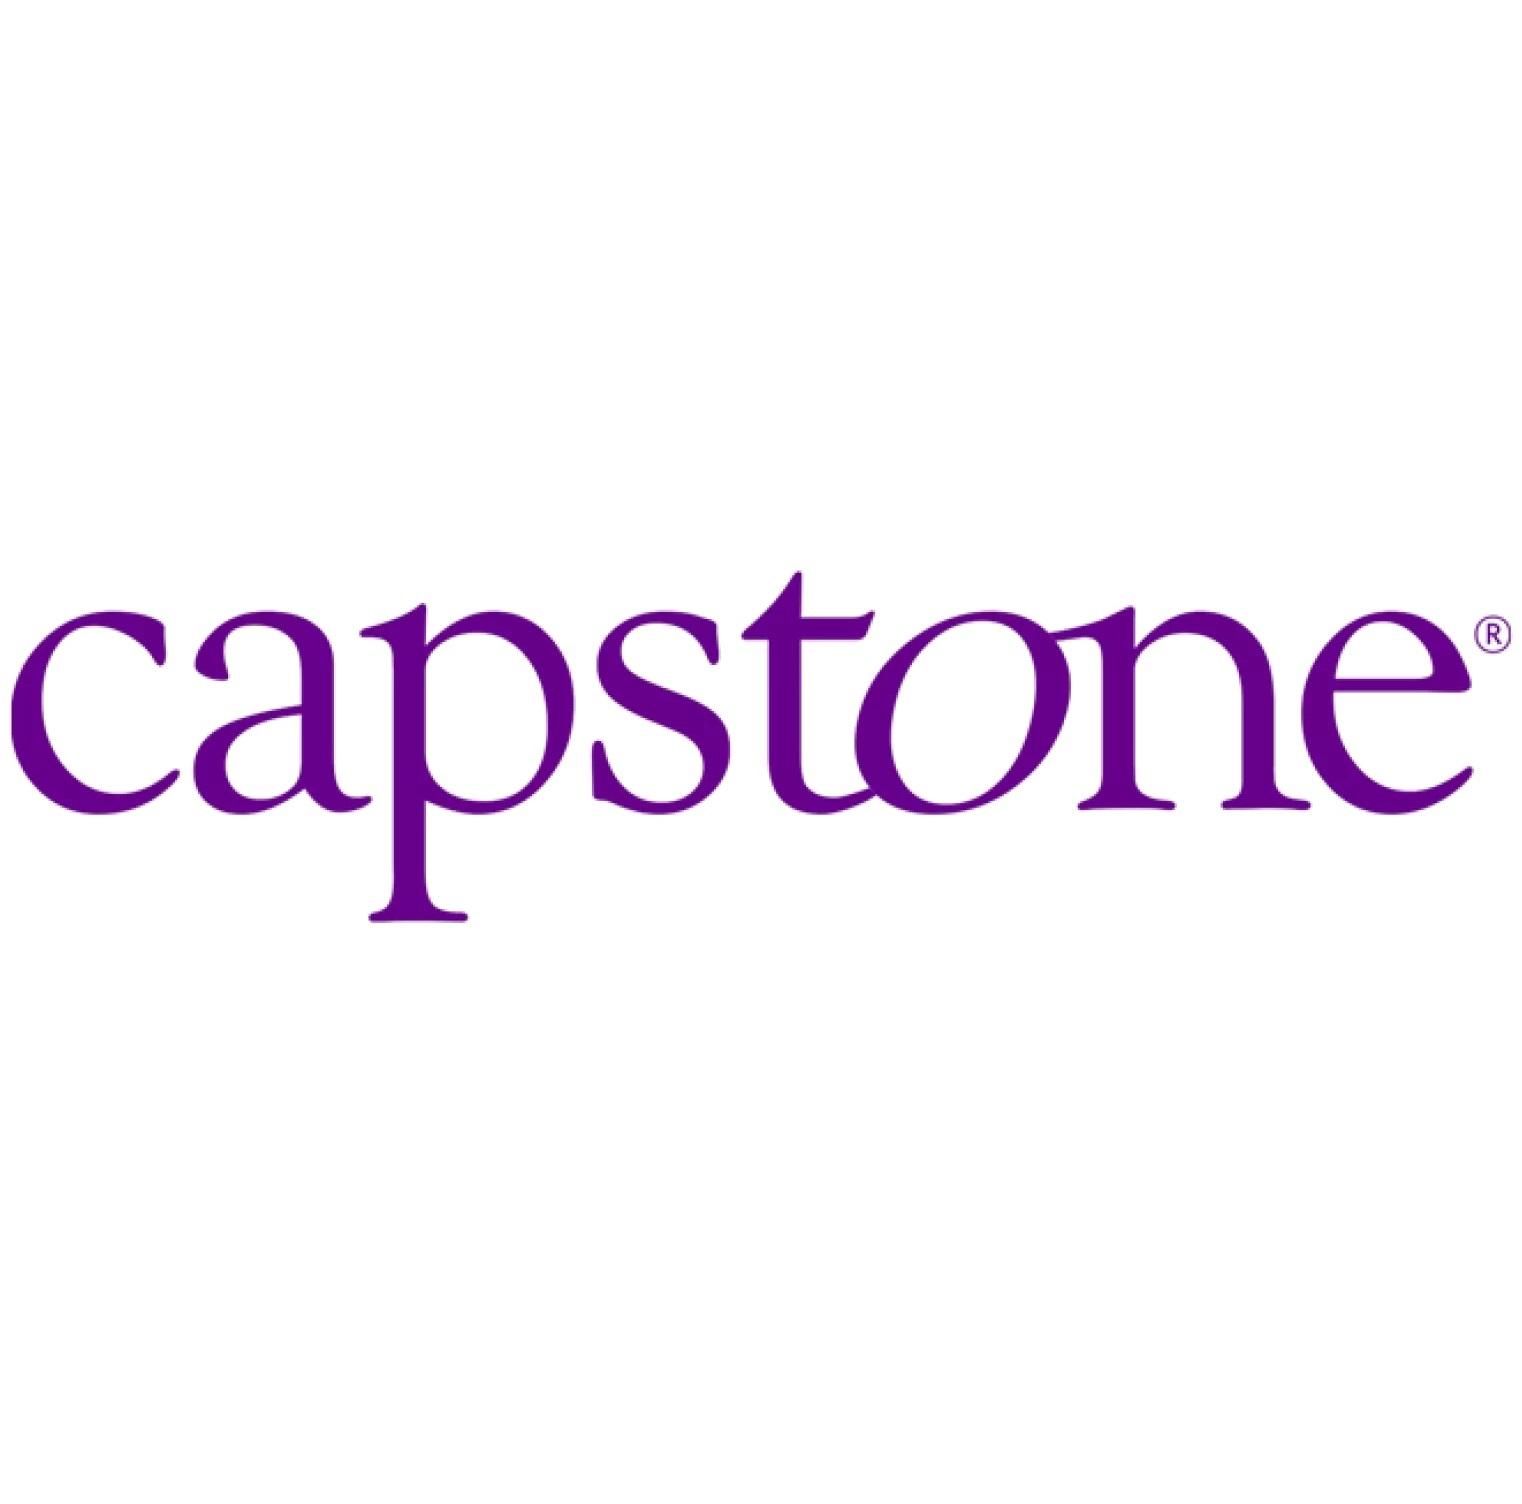 Capstone Publishing's purple wordmark.